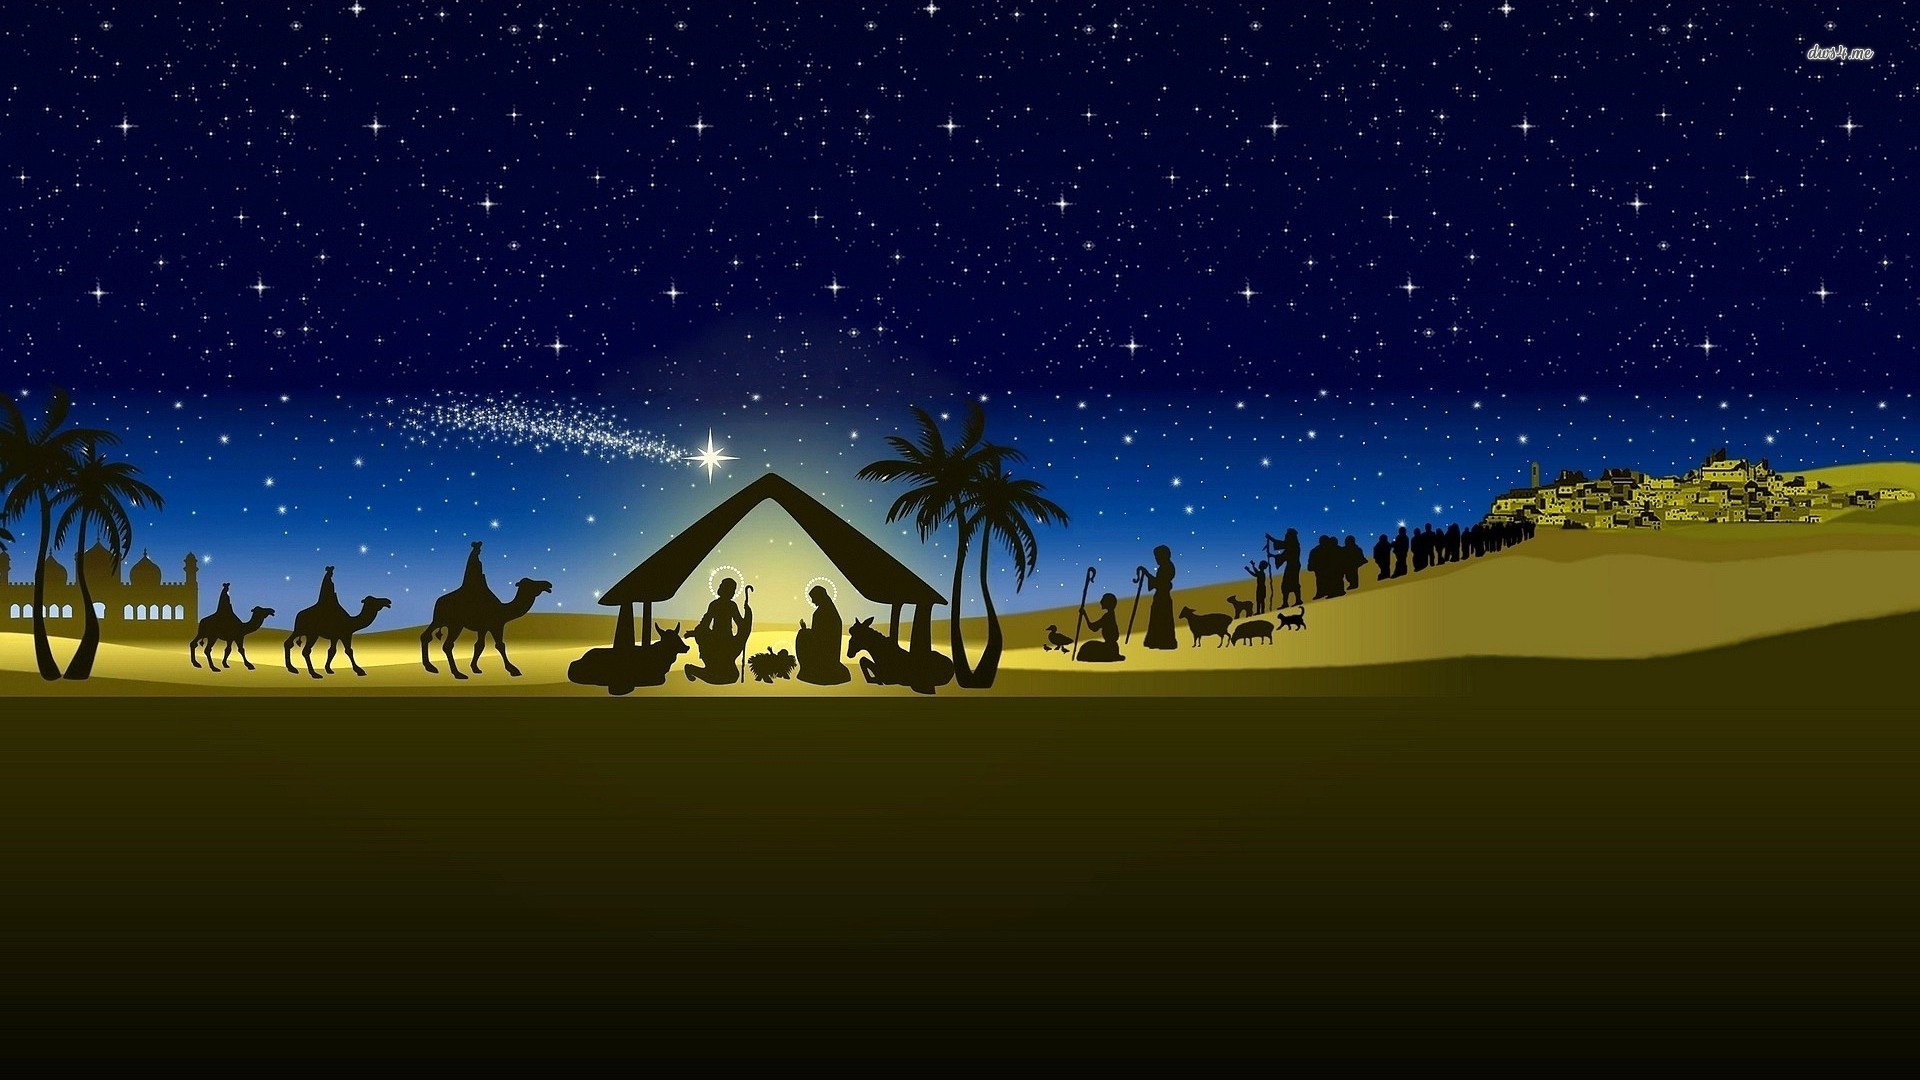 1920x1080 nativity scenes | Nativity scene Papel de Parede Imagem | Nativity Scenes |  Pinterest | Christmas nativity